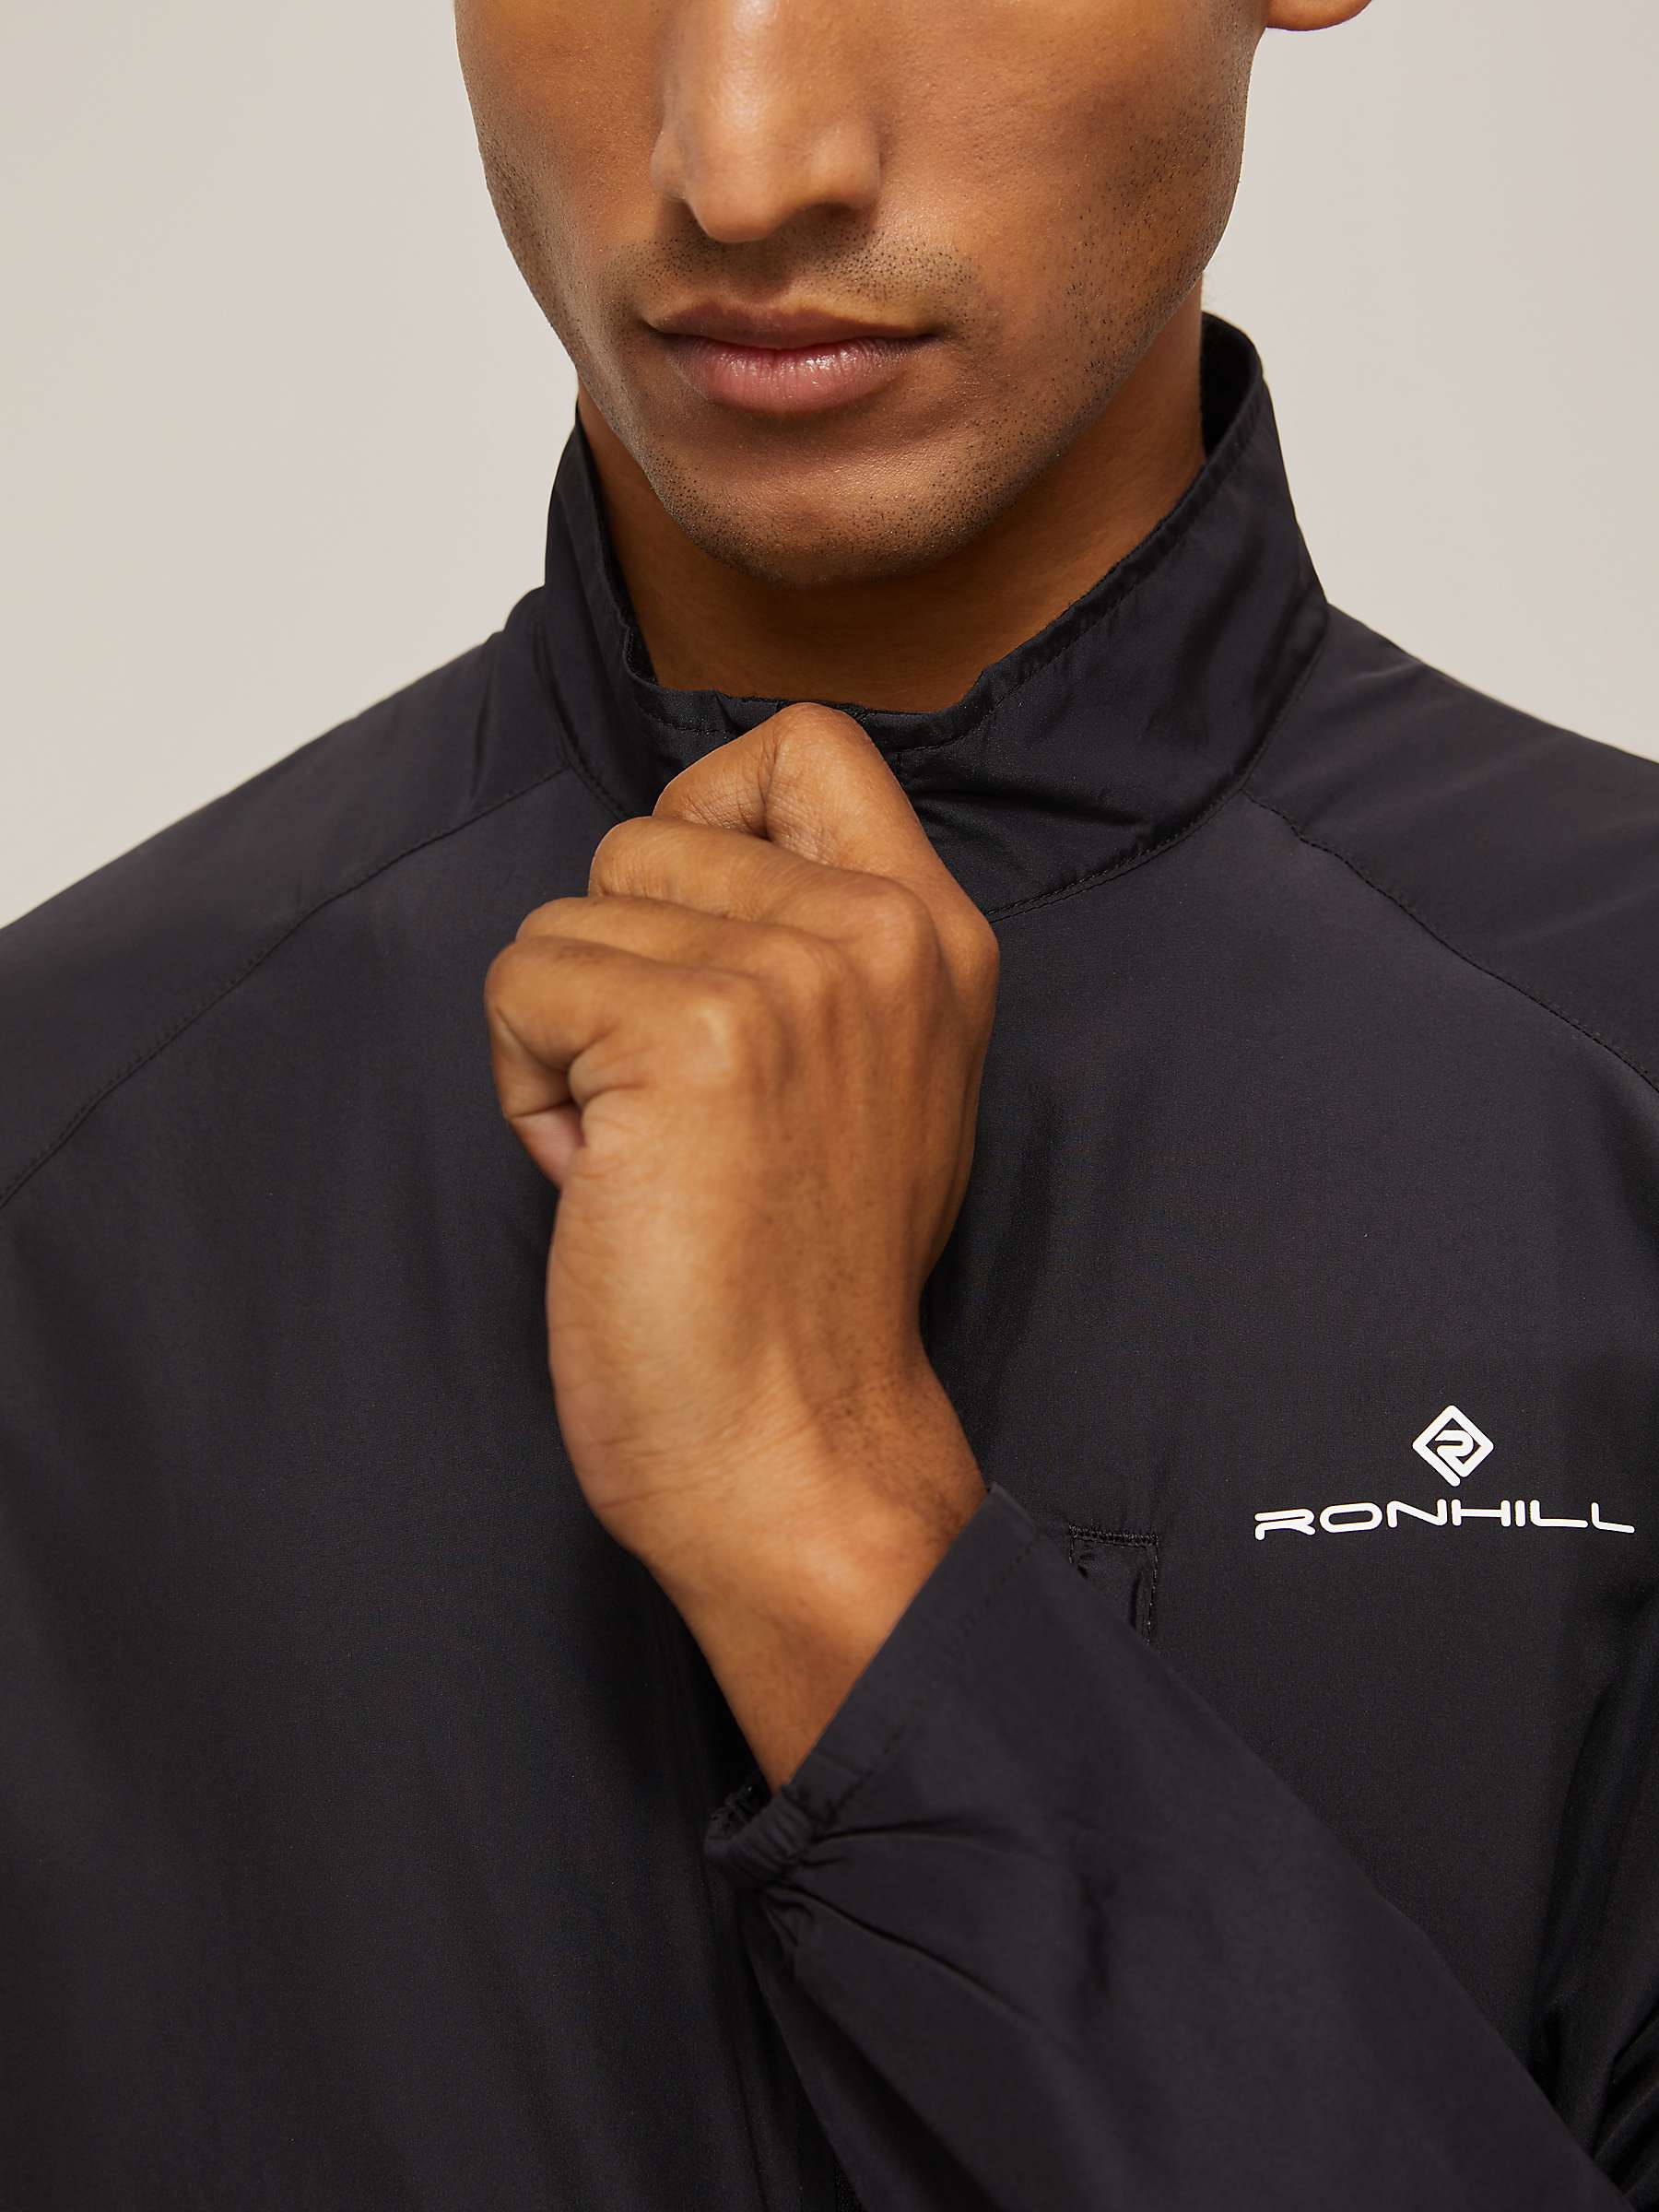 Buy Ronhill Core Men's Water Resistant Running Jacket Online at johnlewis.com